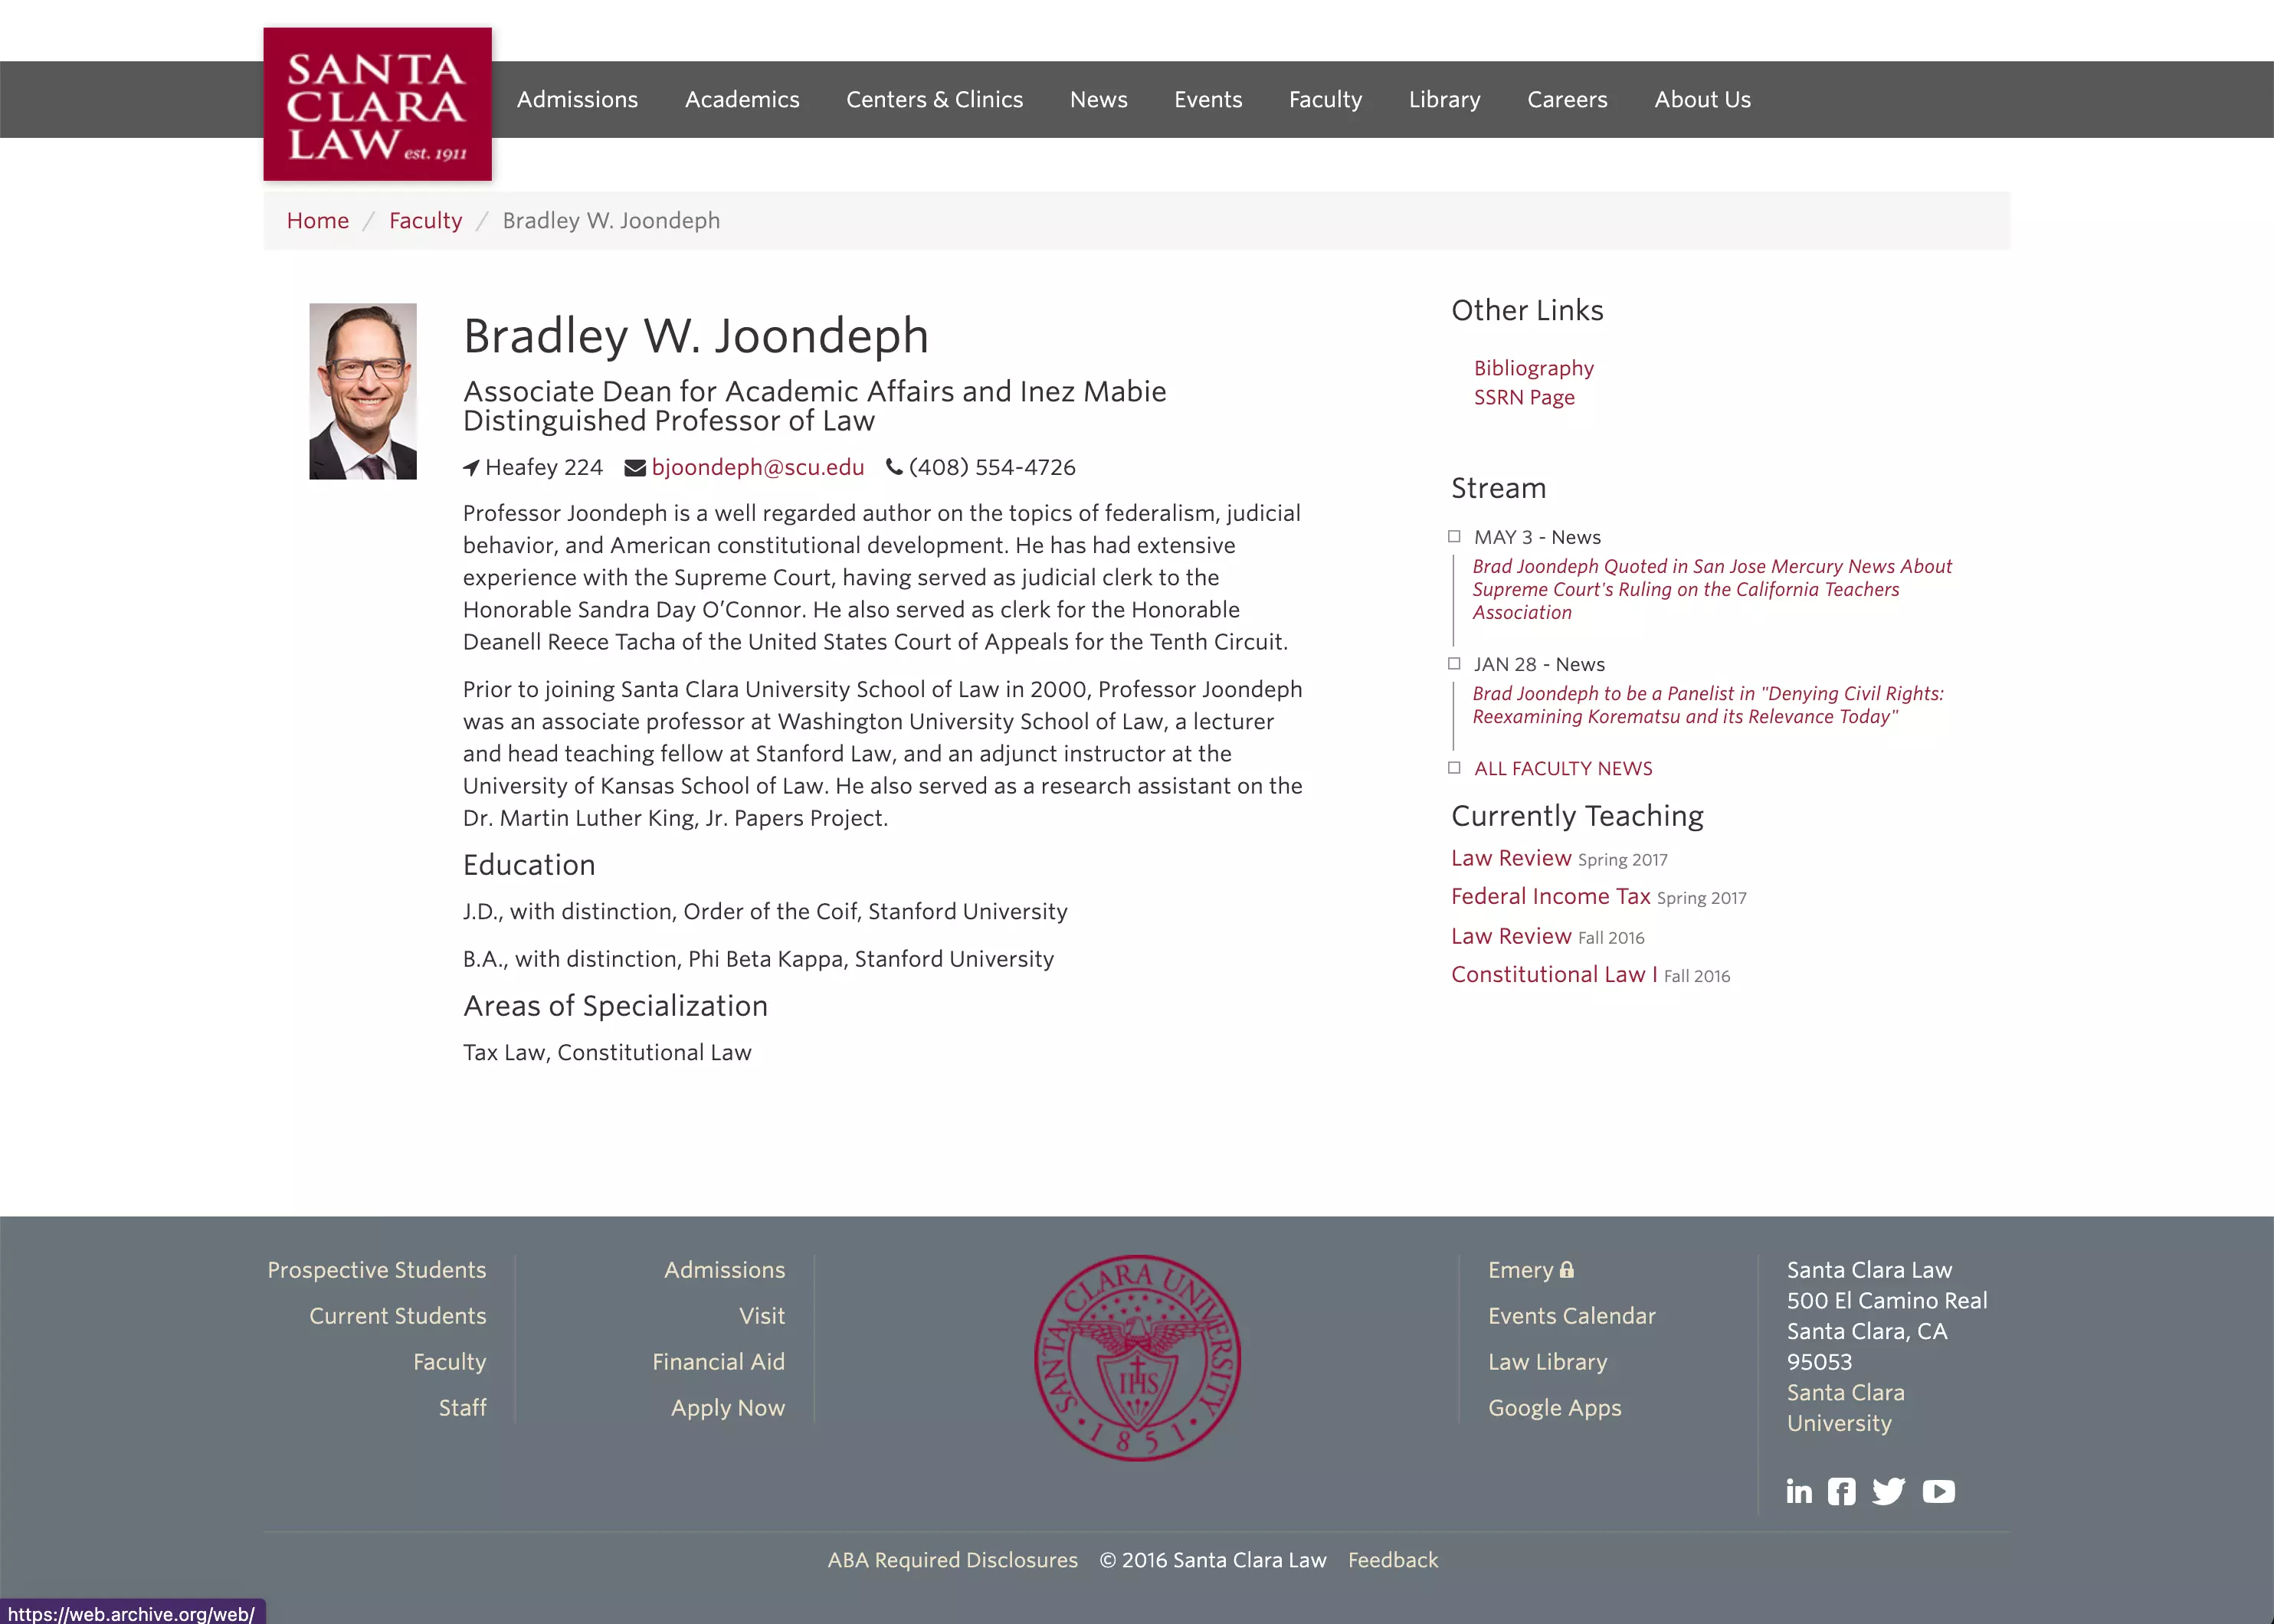 Screenshot of Santa Clara Law's Faculty profile page showing Brad Joondeph.